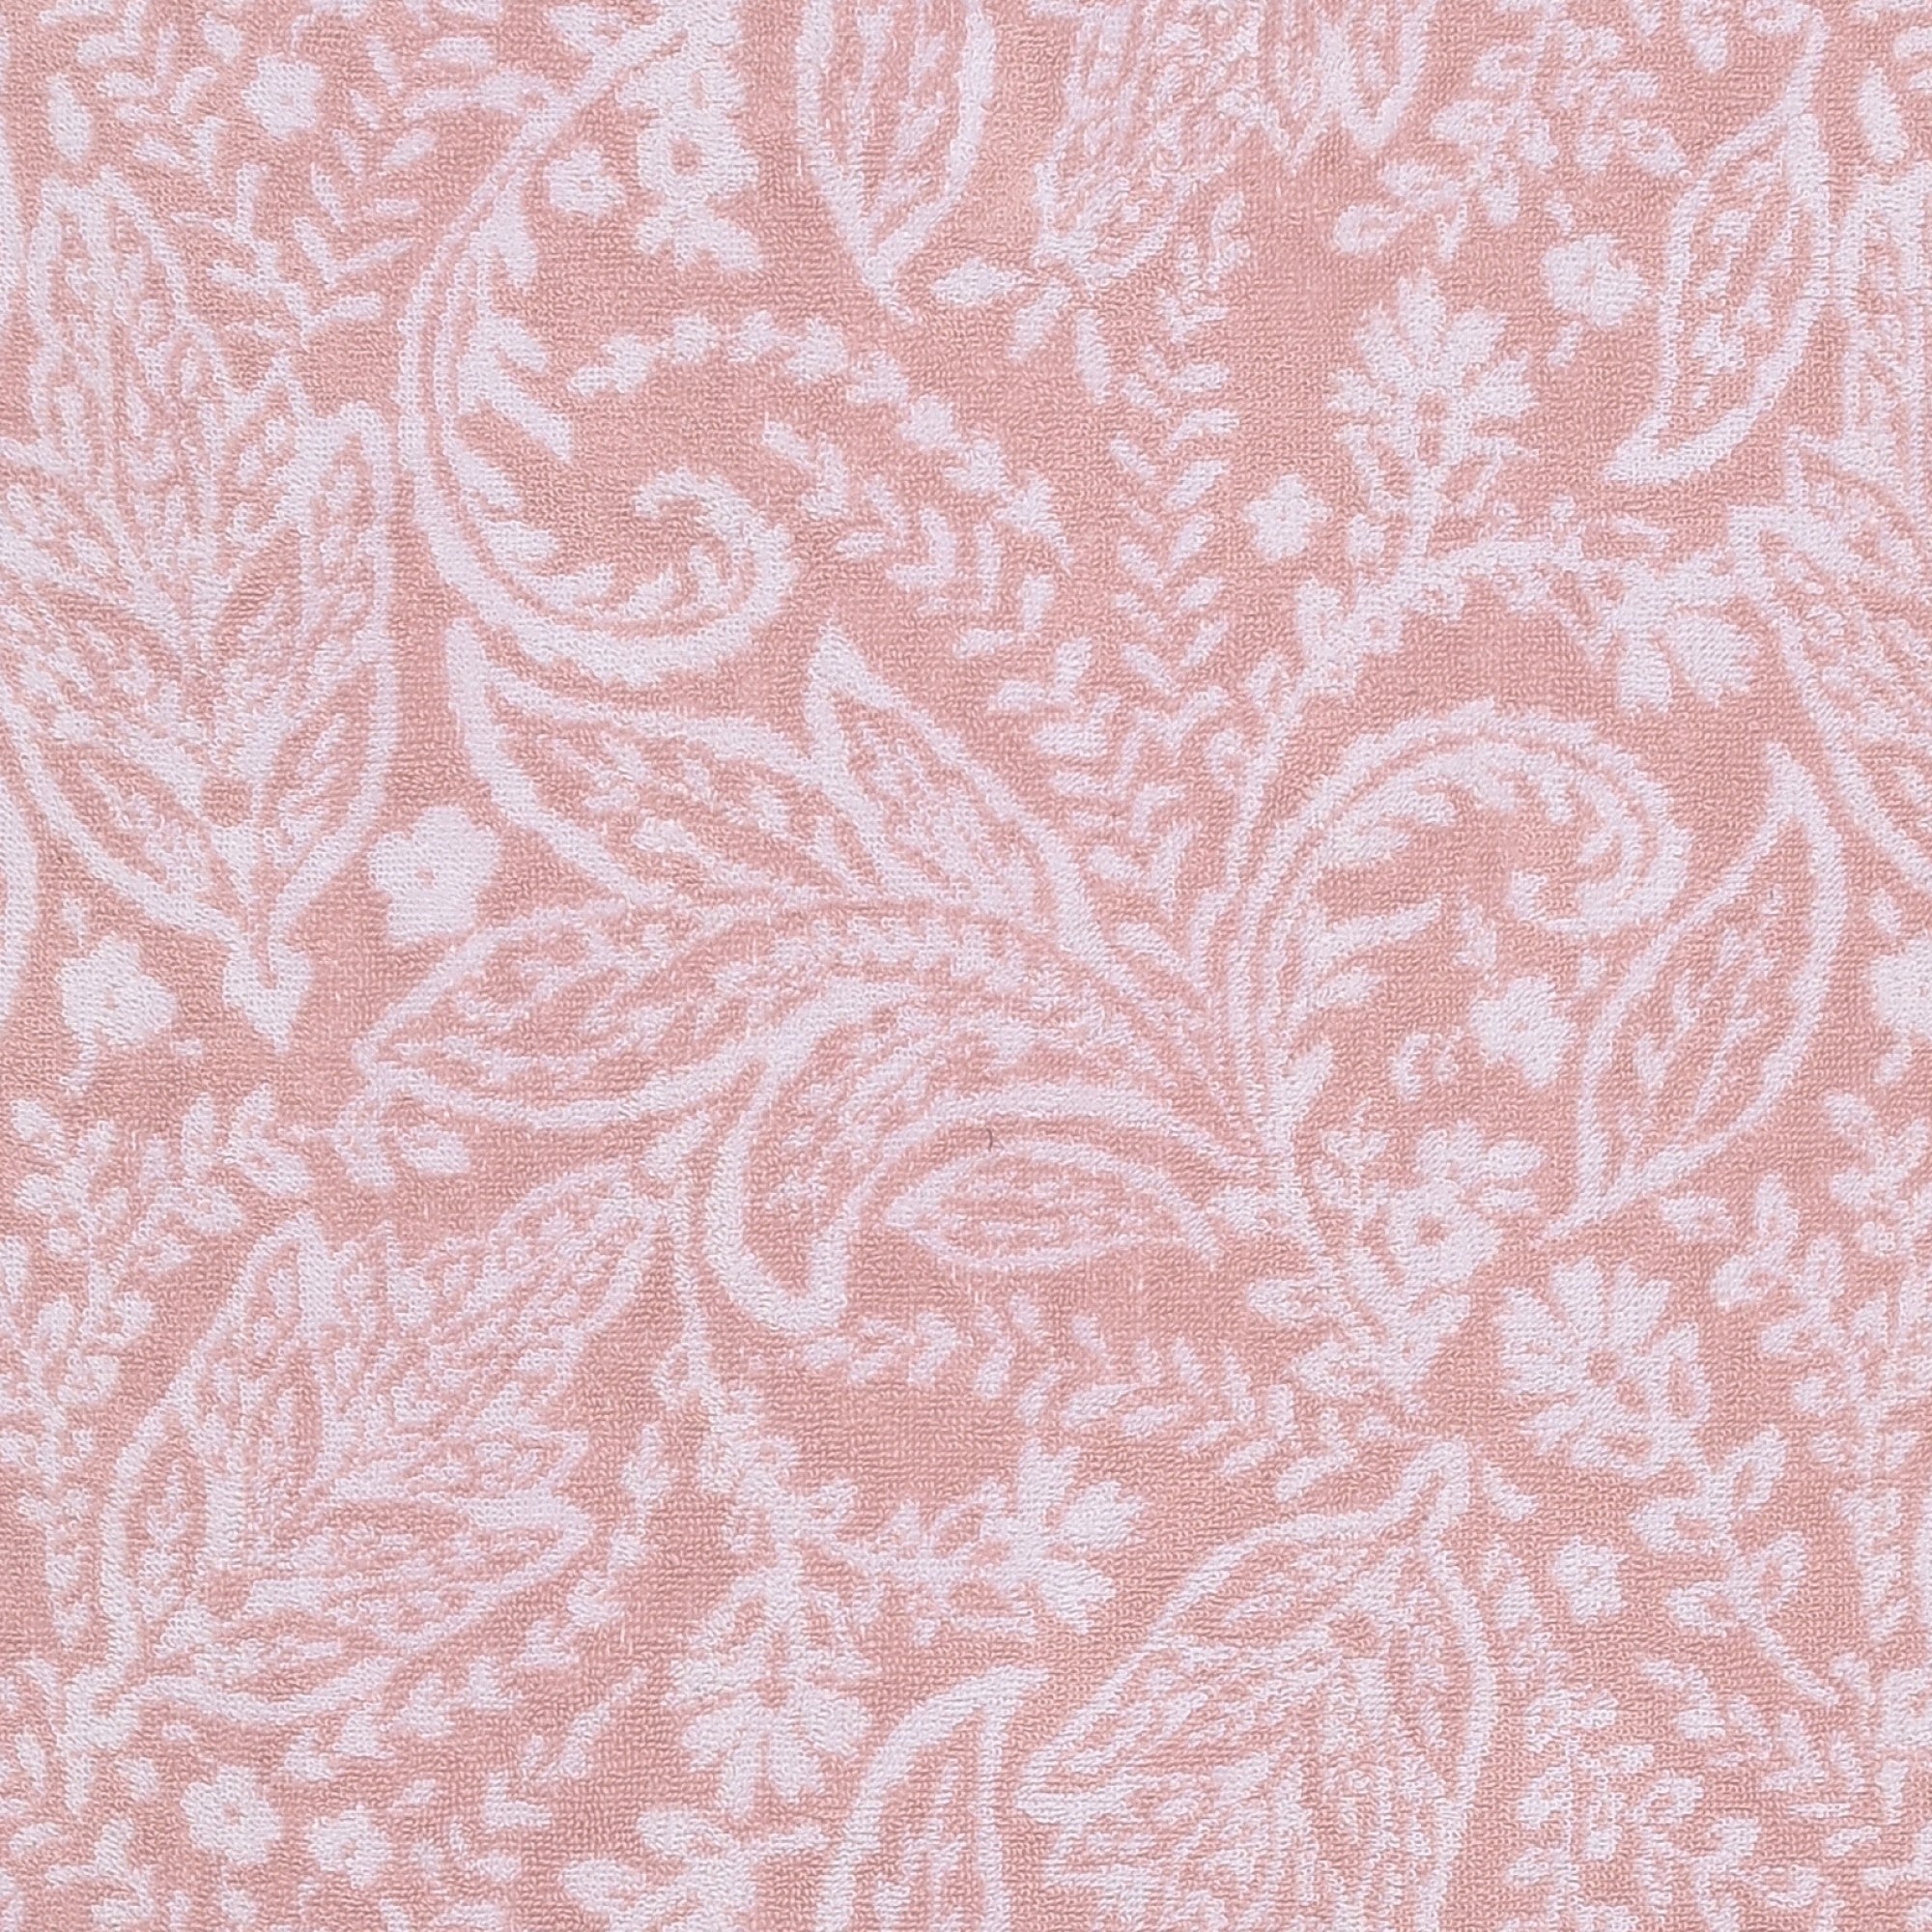 Bath Sheet Aveline by D&D Bathroom in Soft Pink